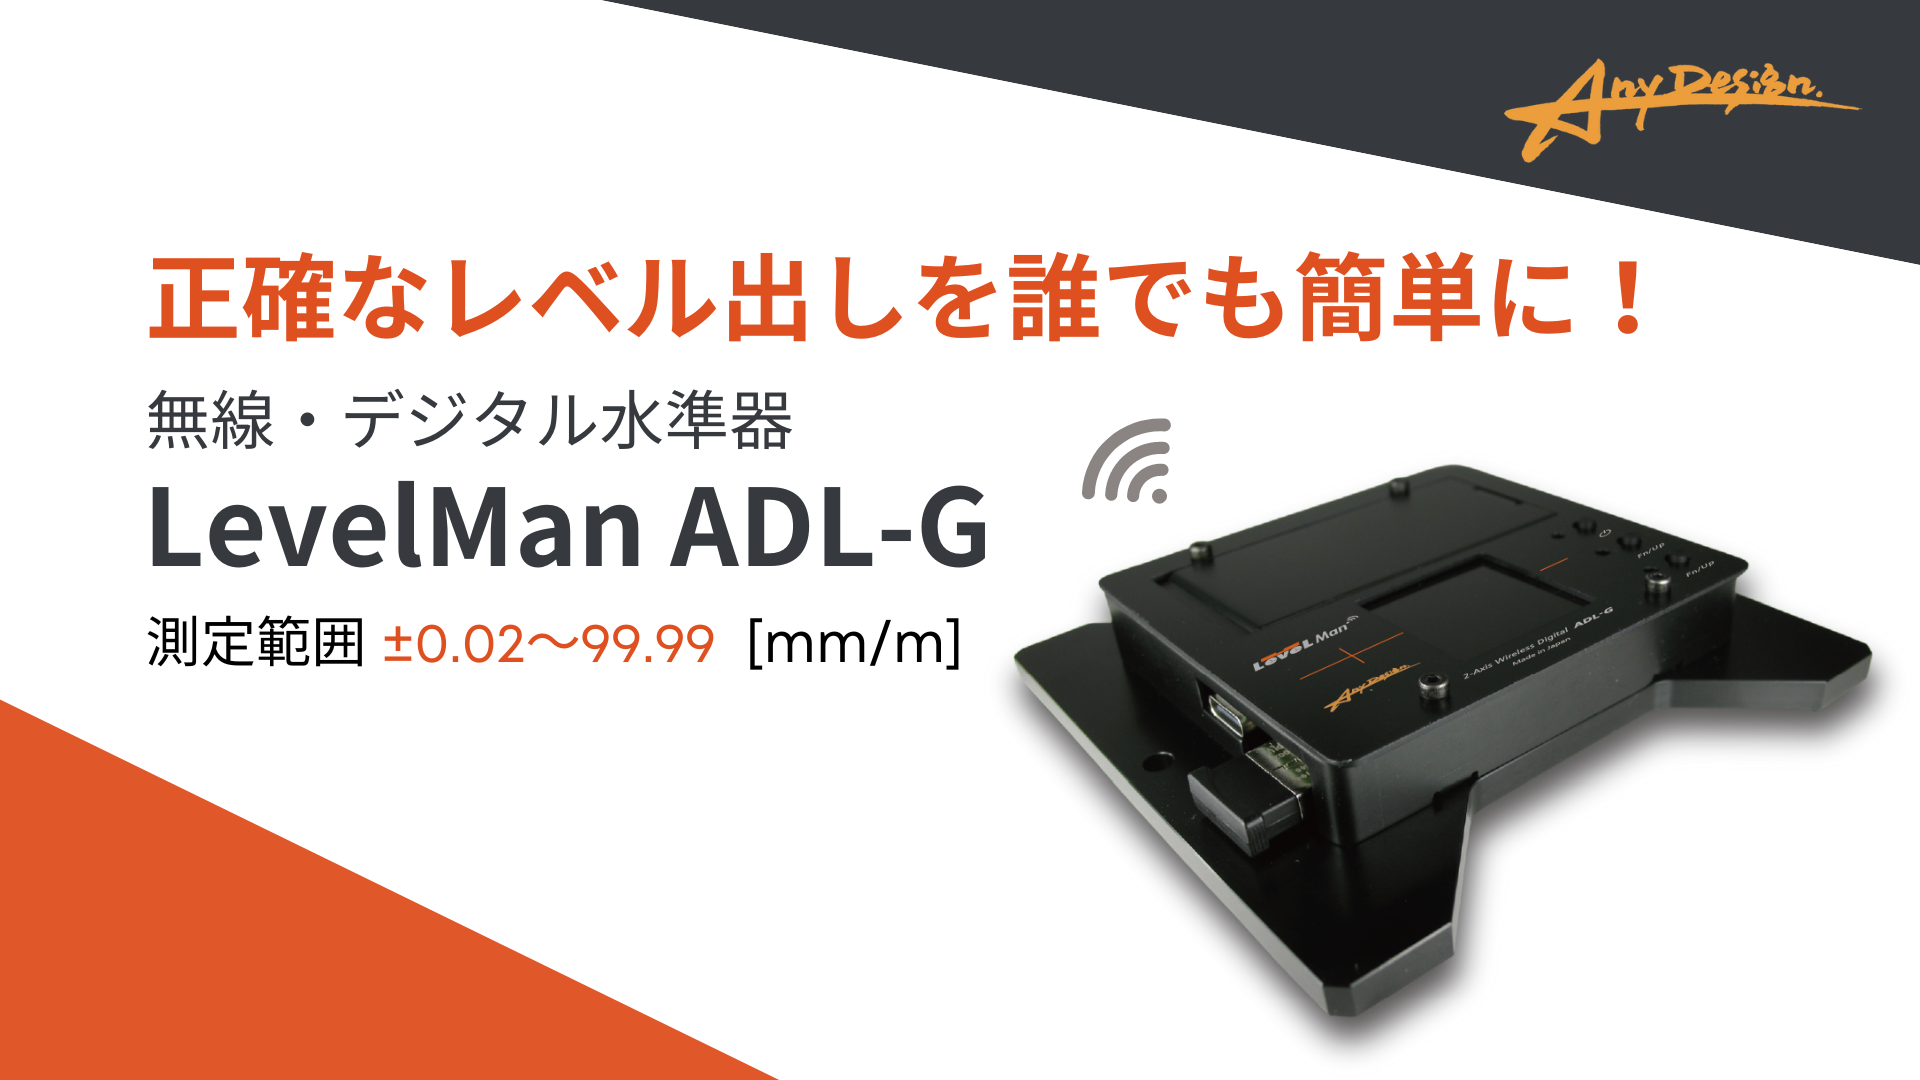 LevelMan ADL-G